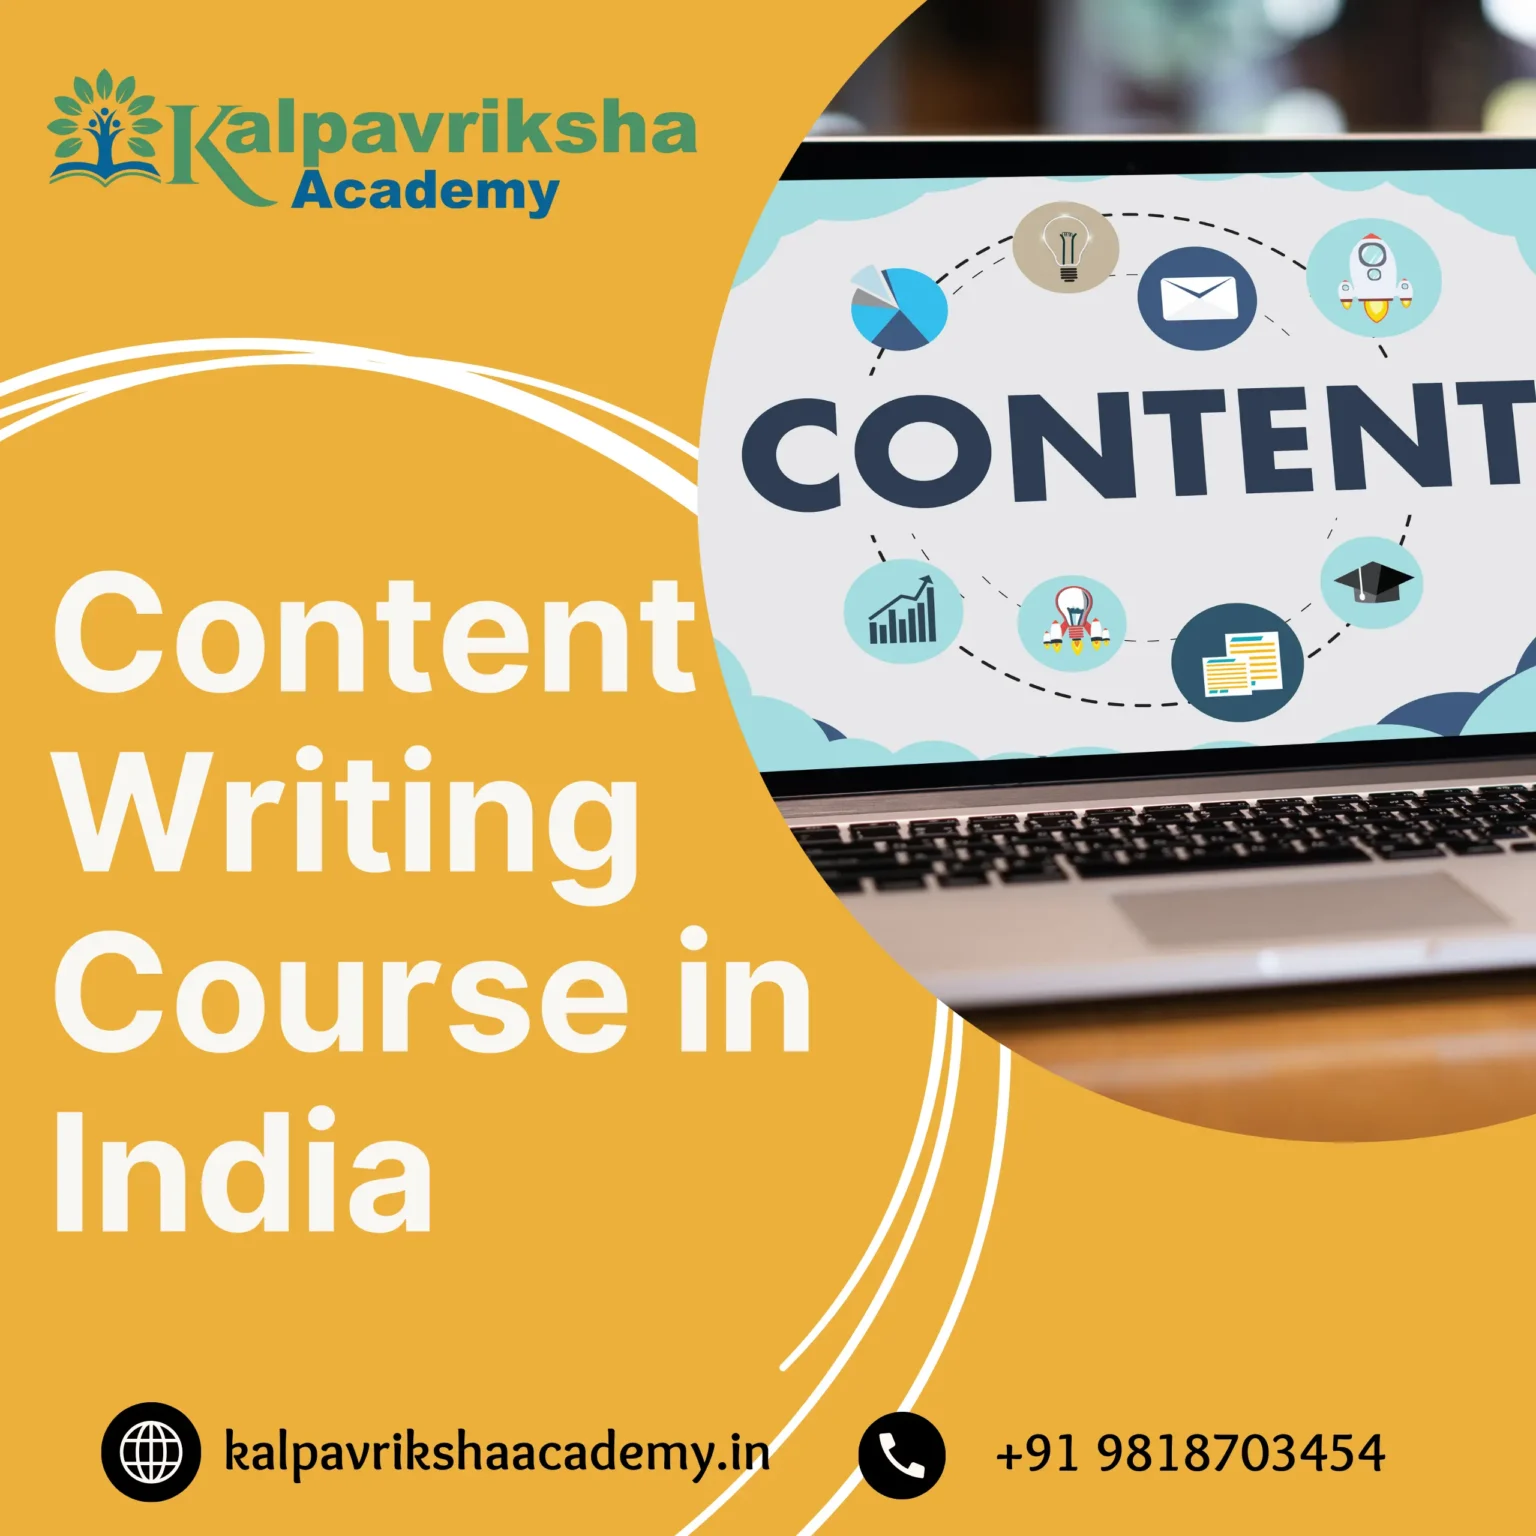 Content Writing Course in India - Kalpavriksha Academy